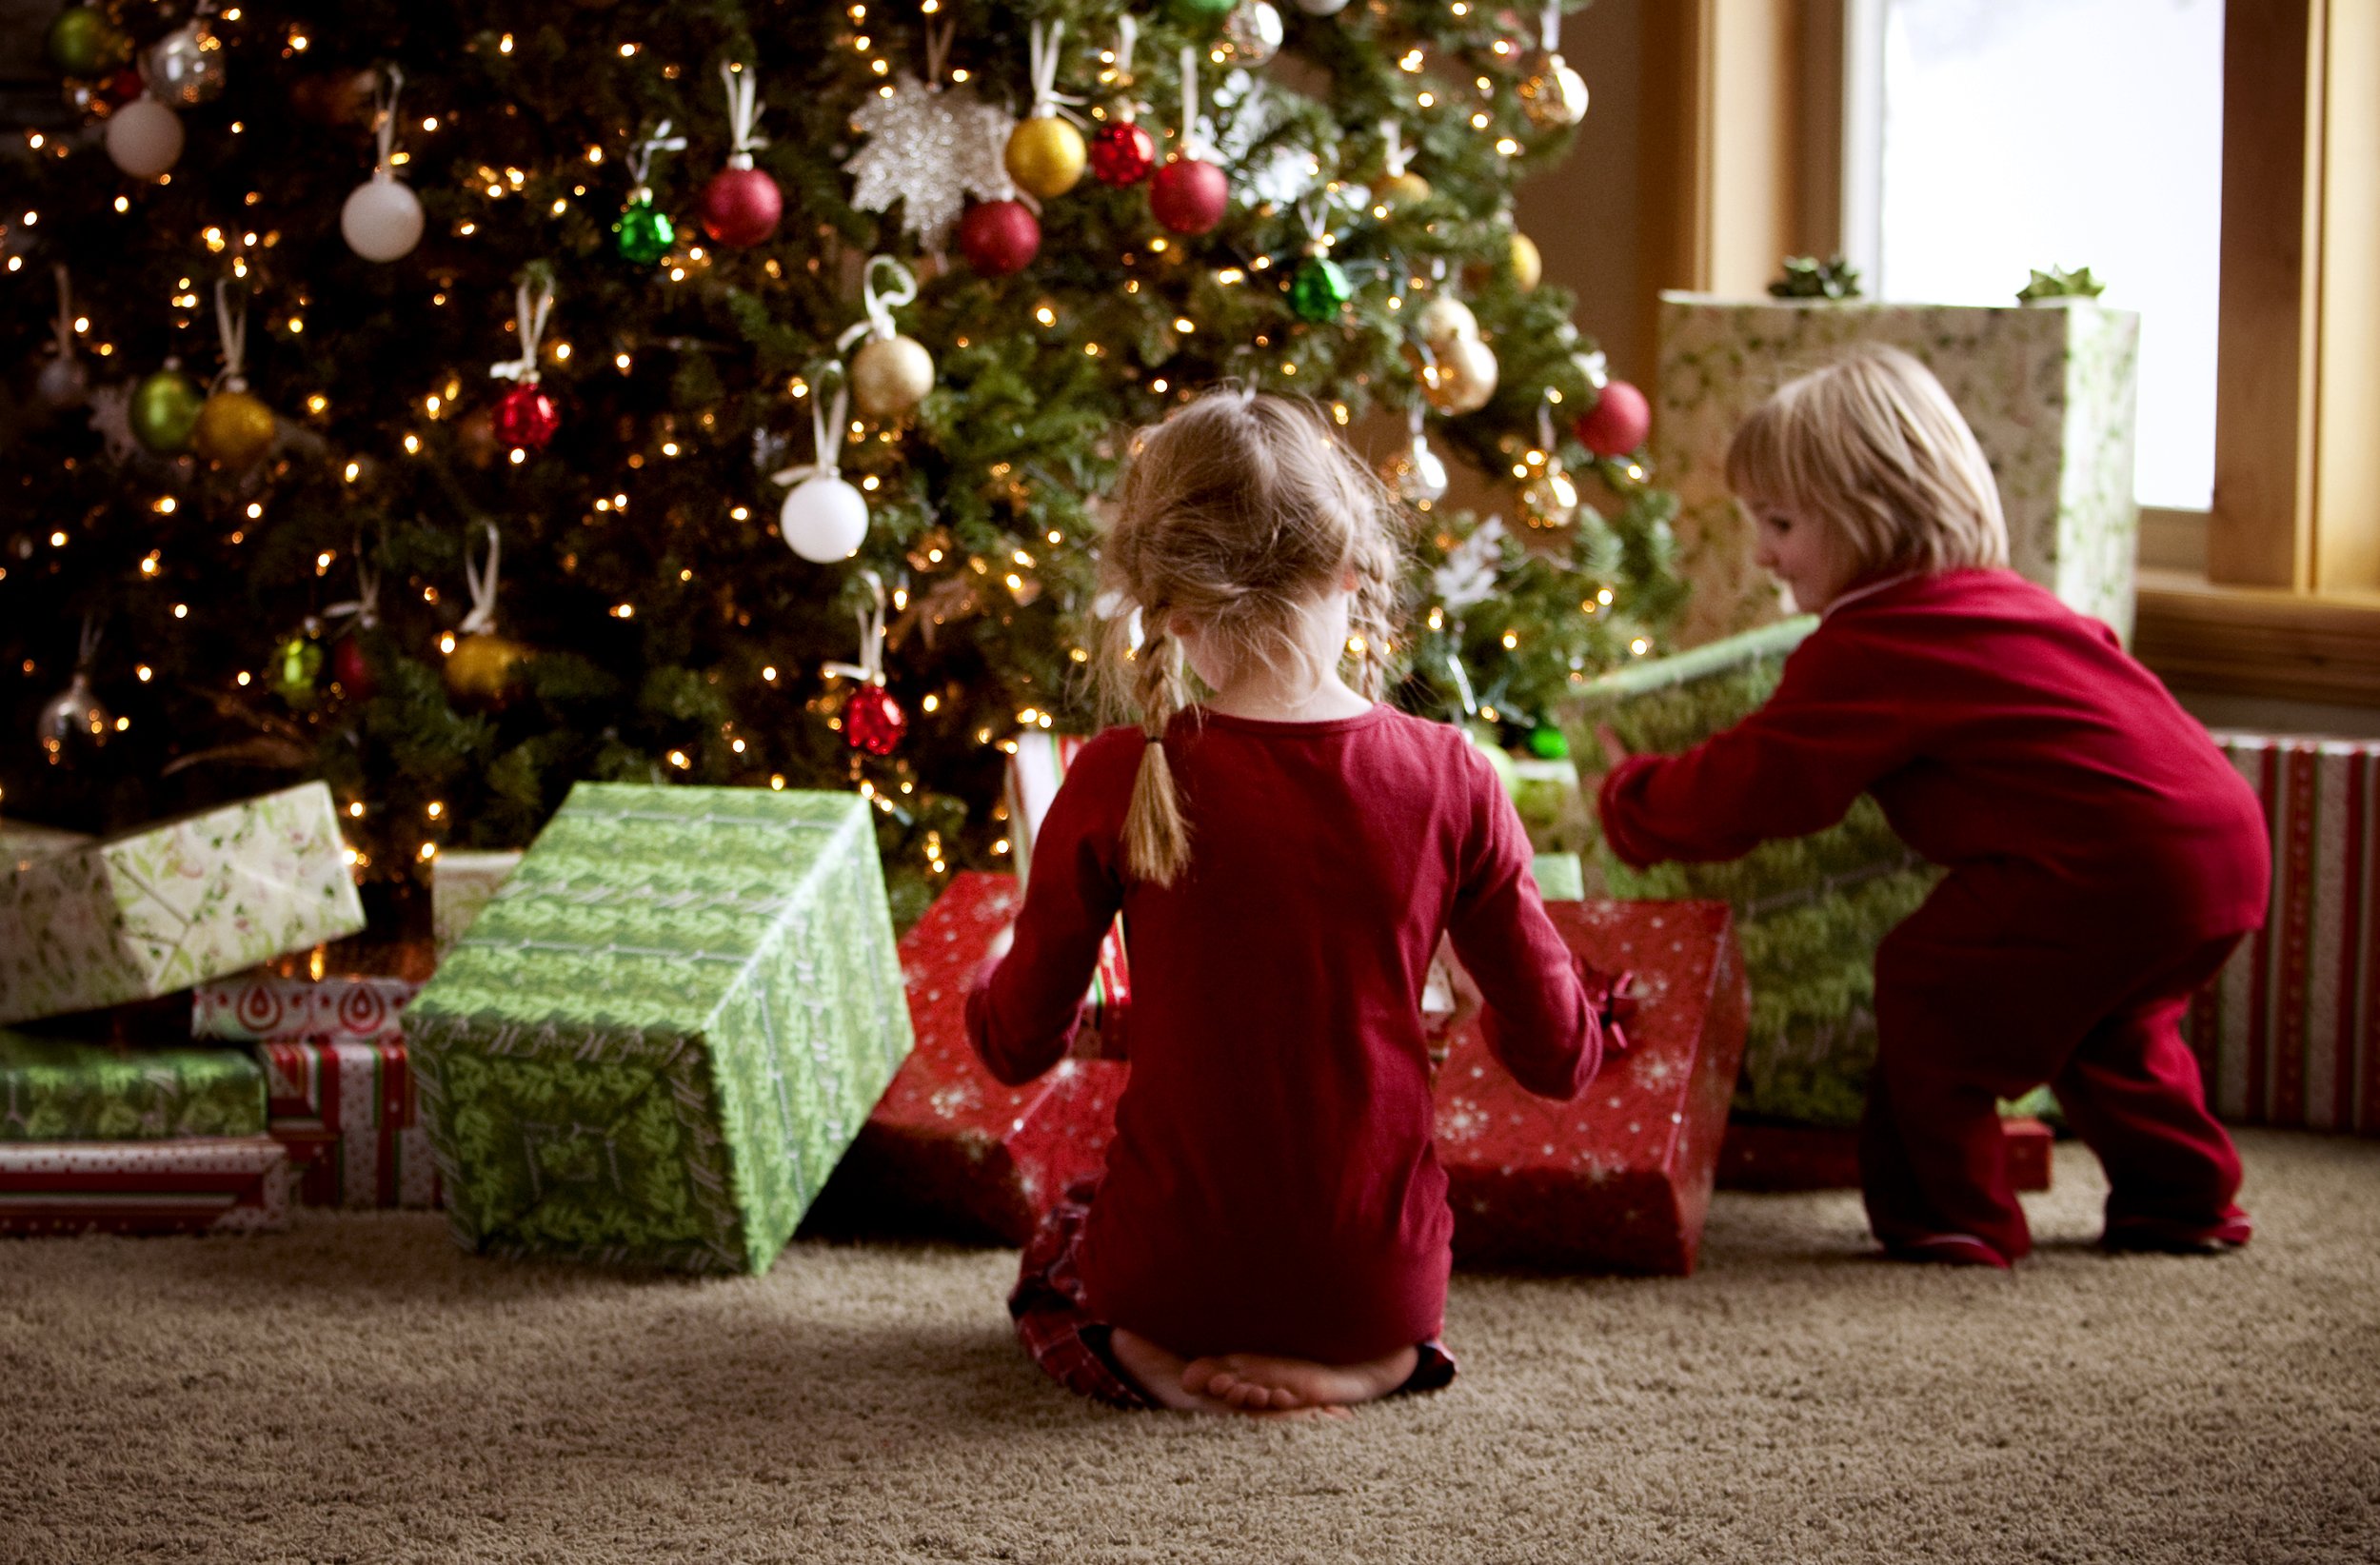 191216-christmas-morning-children-gifts-stock-cs-1144a.jpg